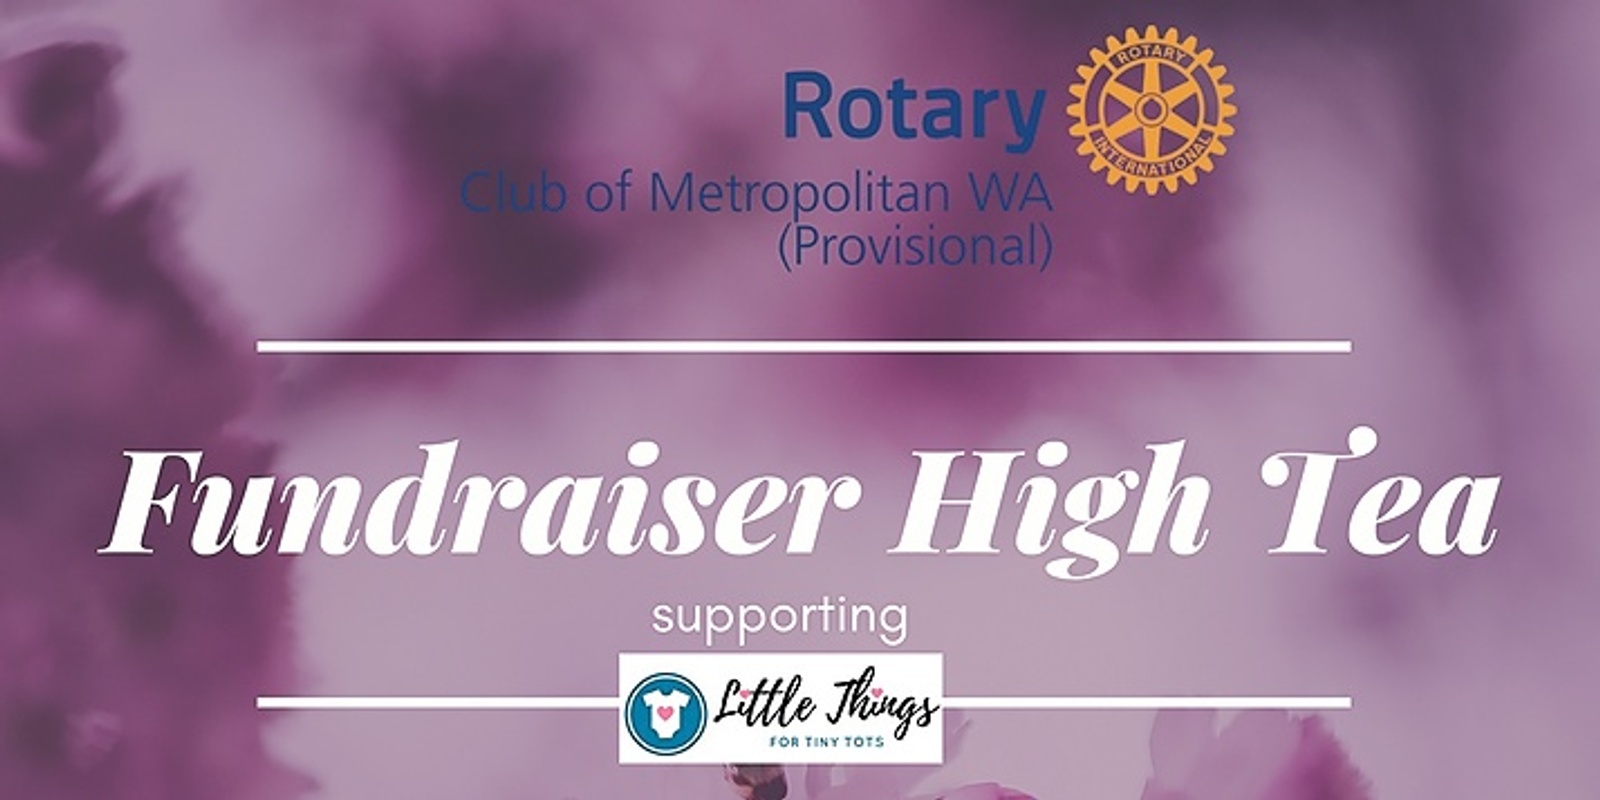 Banner image for Rotary Club of Metropolitan WA High Tea